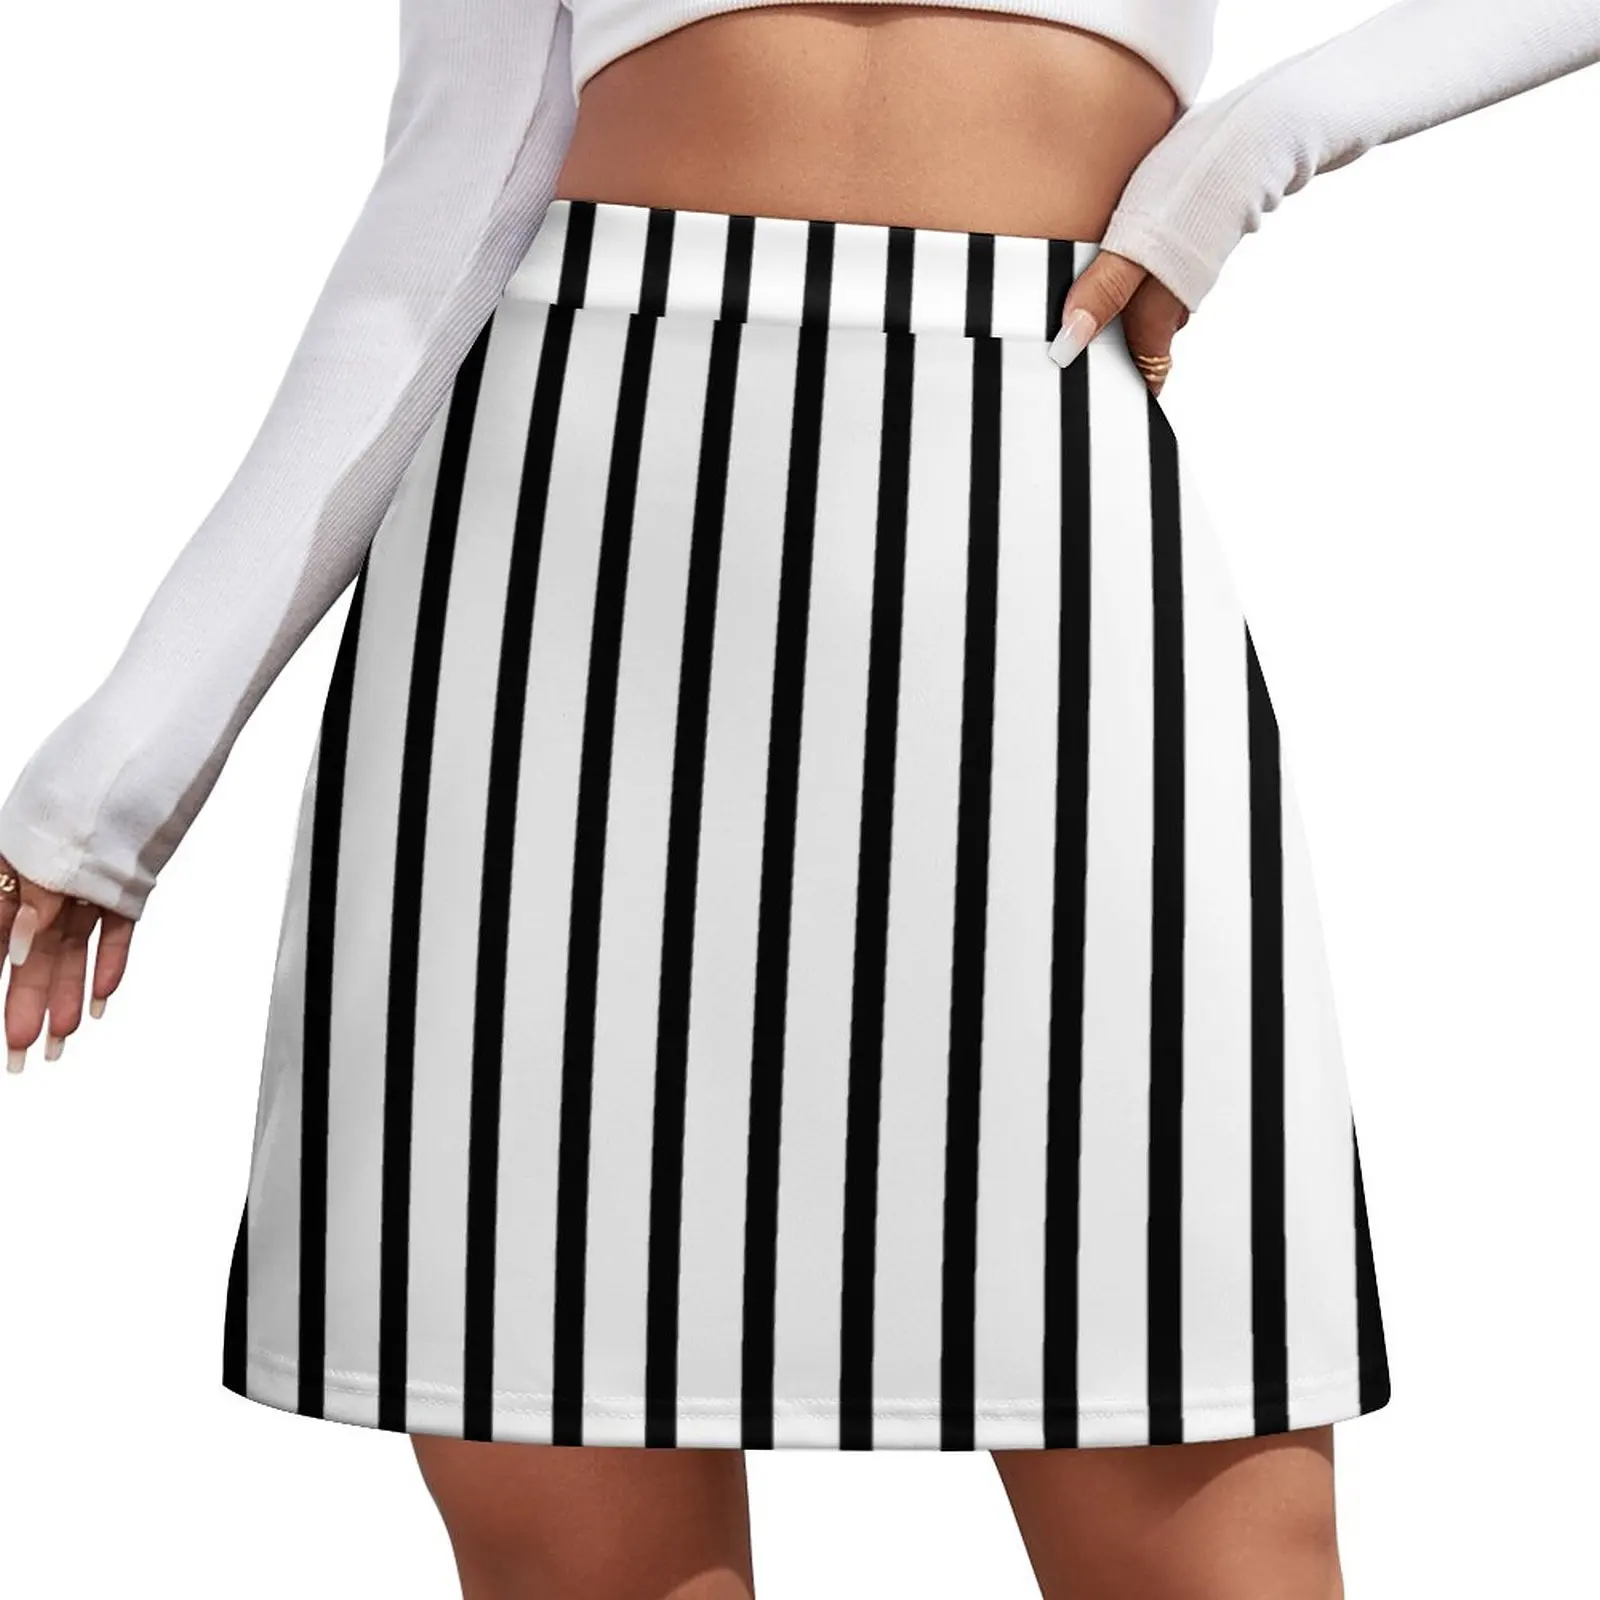 Thin Black White Stripes Miniskirt Mini Skirt korean ladies summer cute skirt fashion white stripes under great white northern lights 1 cd